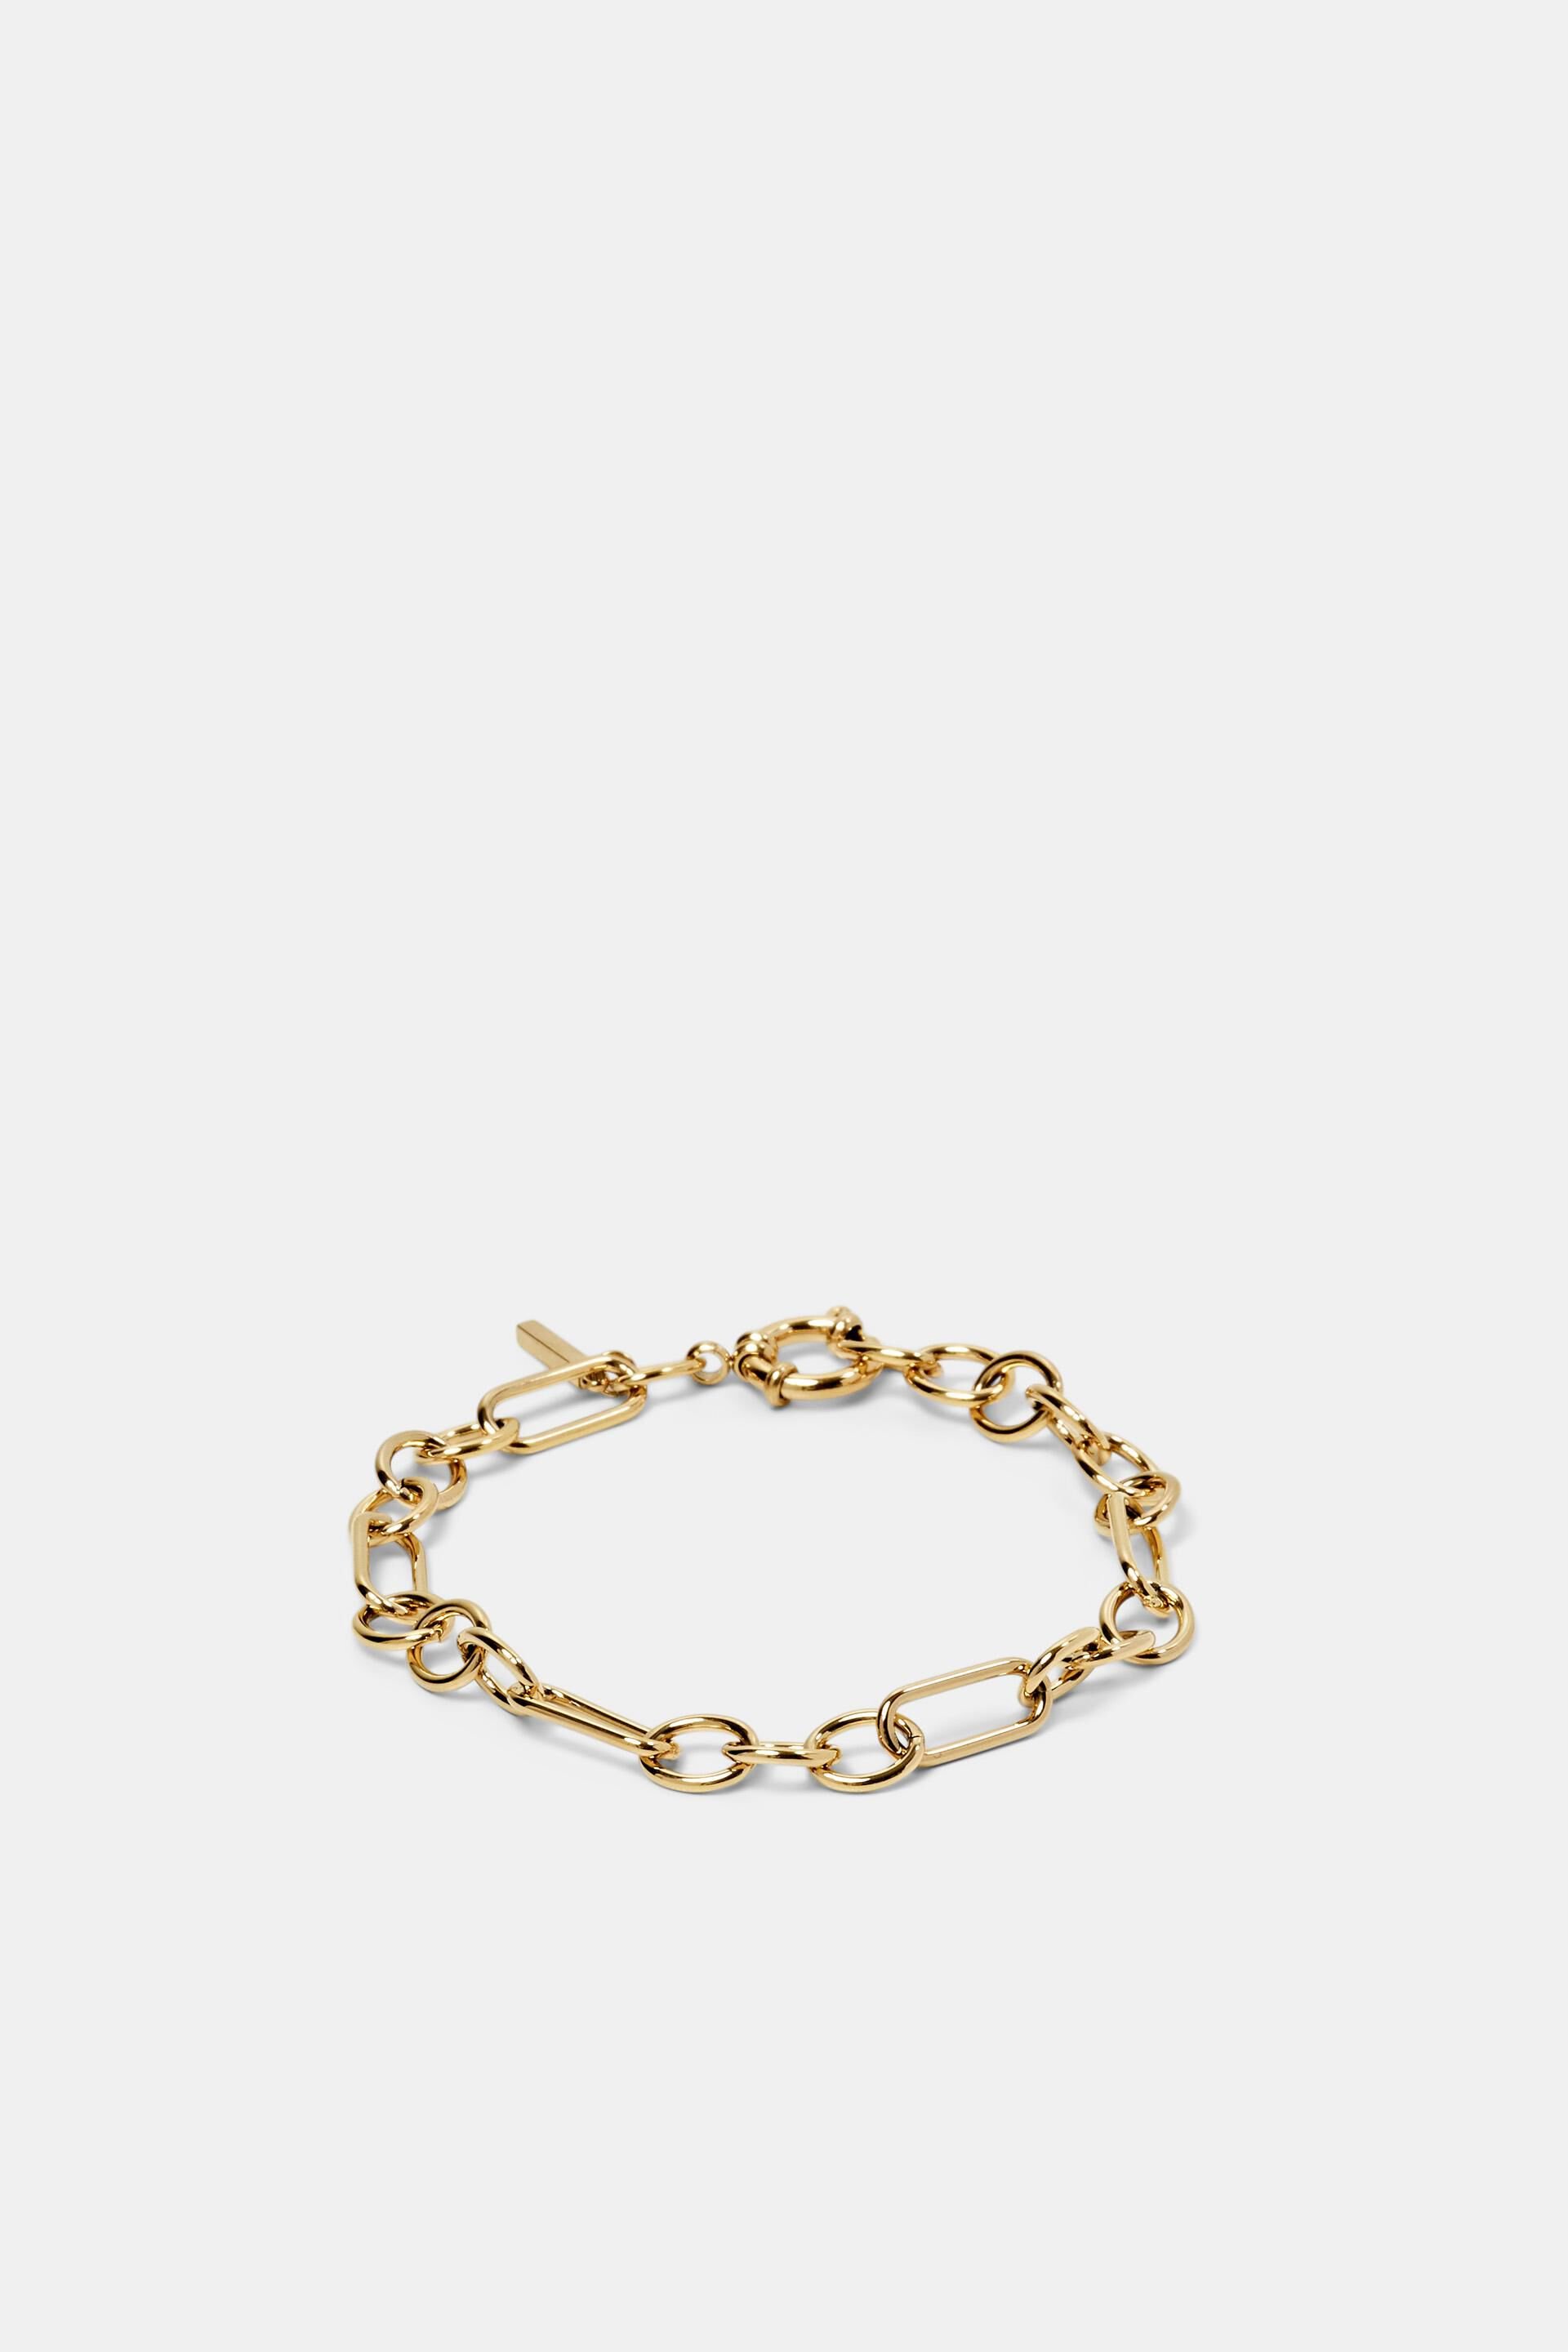 Esprit steel Link bracelet, stainless